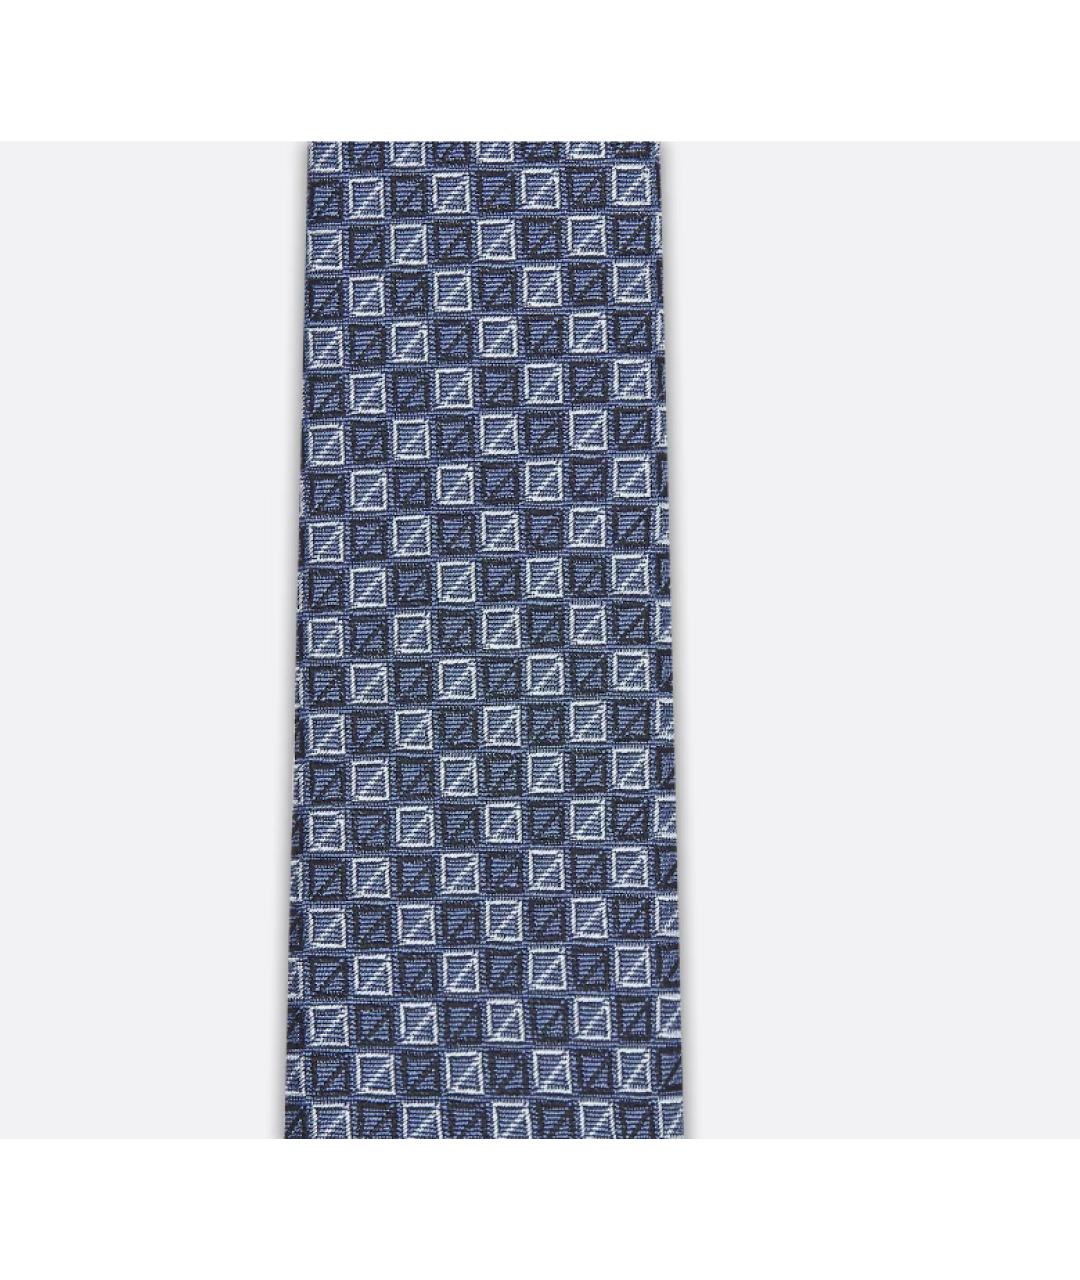 CHRISTIAN DIOR PRE-OWNED Темно-синий шелковый галстук, фото 2